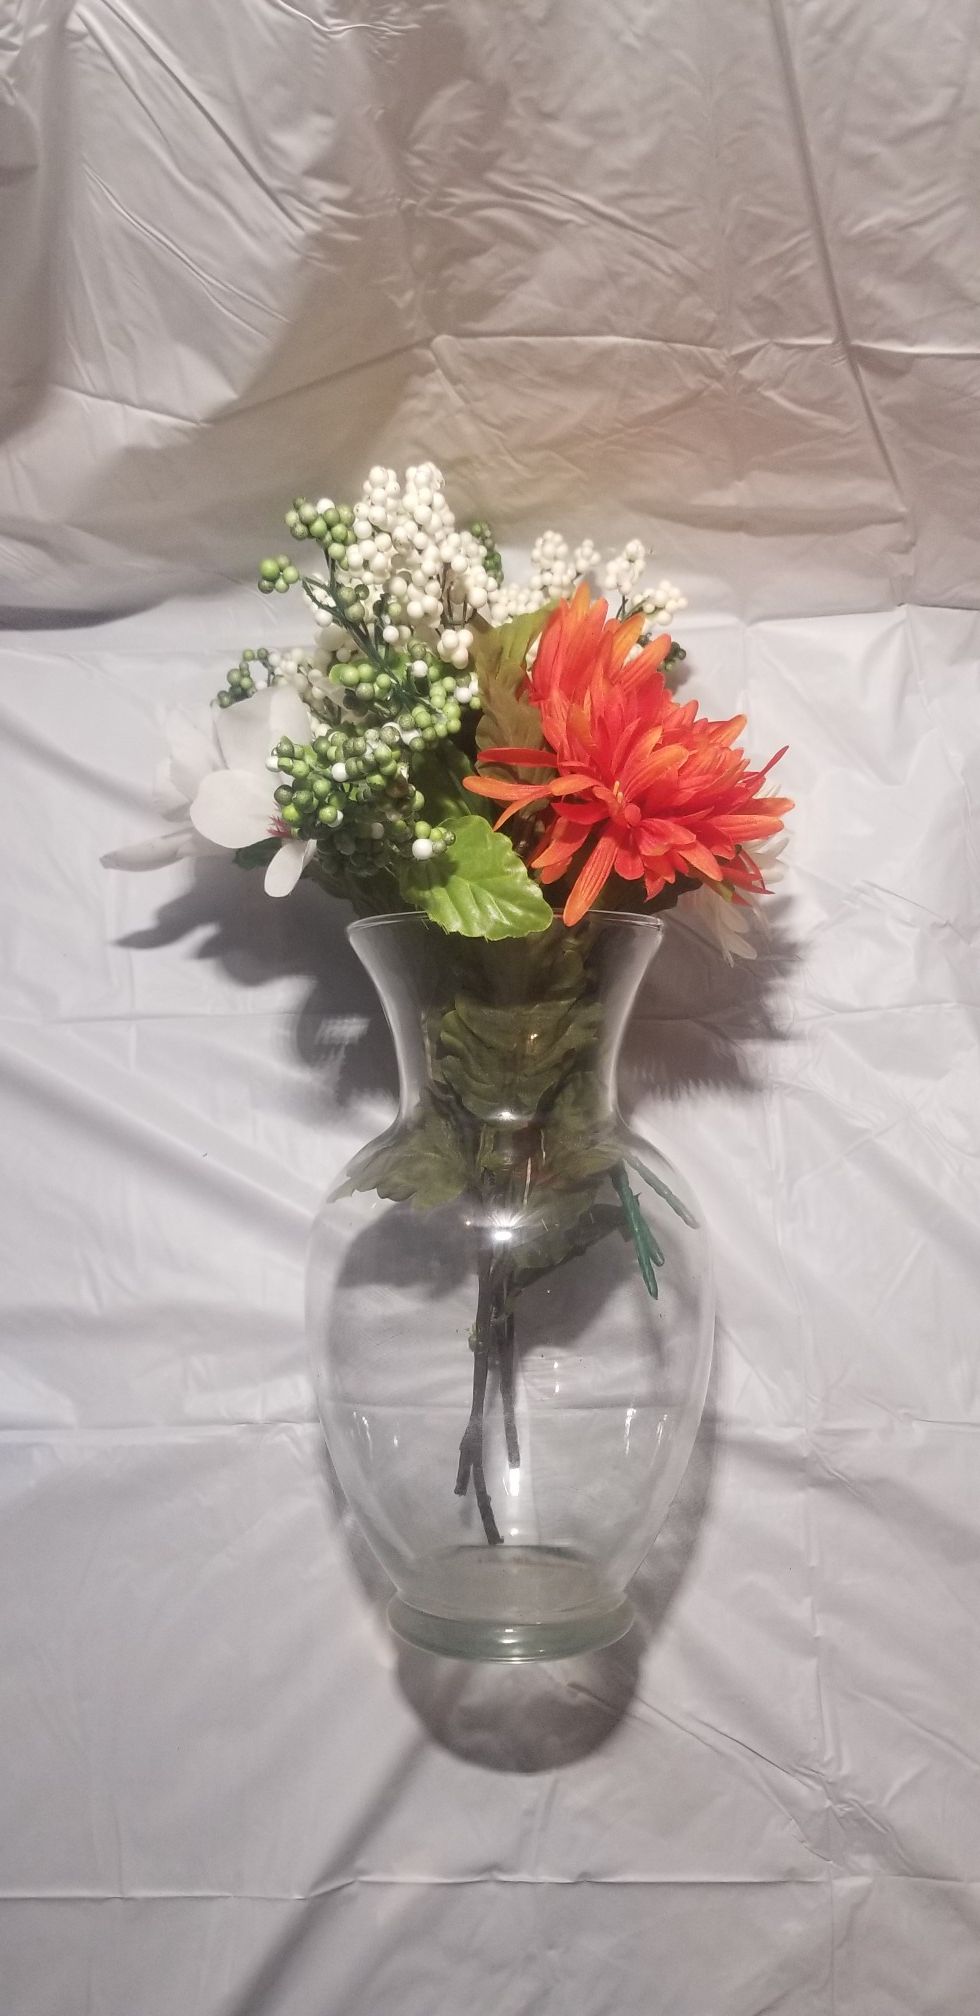 Glass vase and Flower